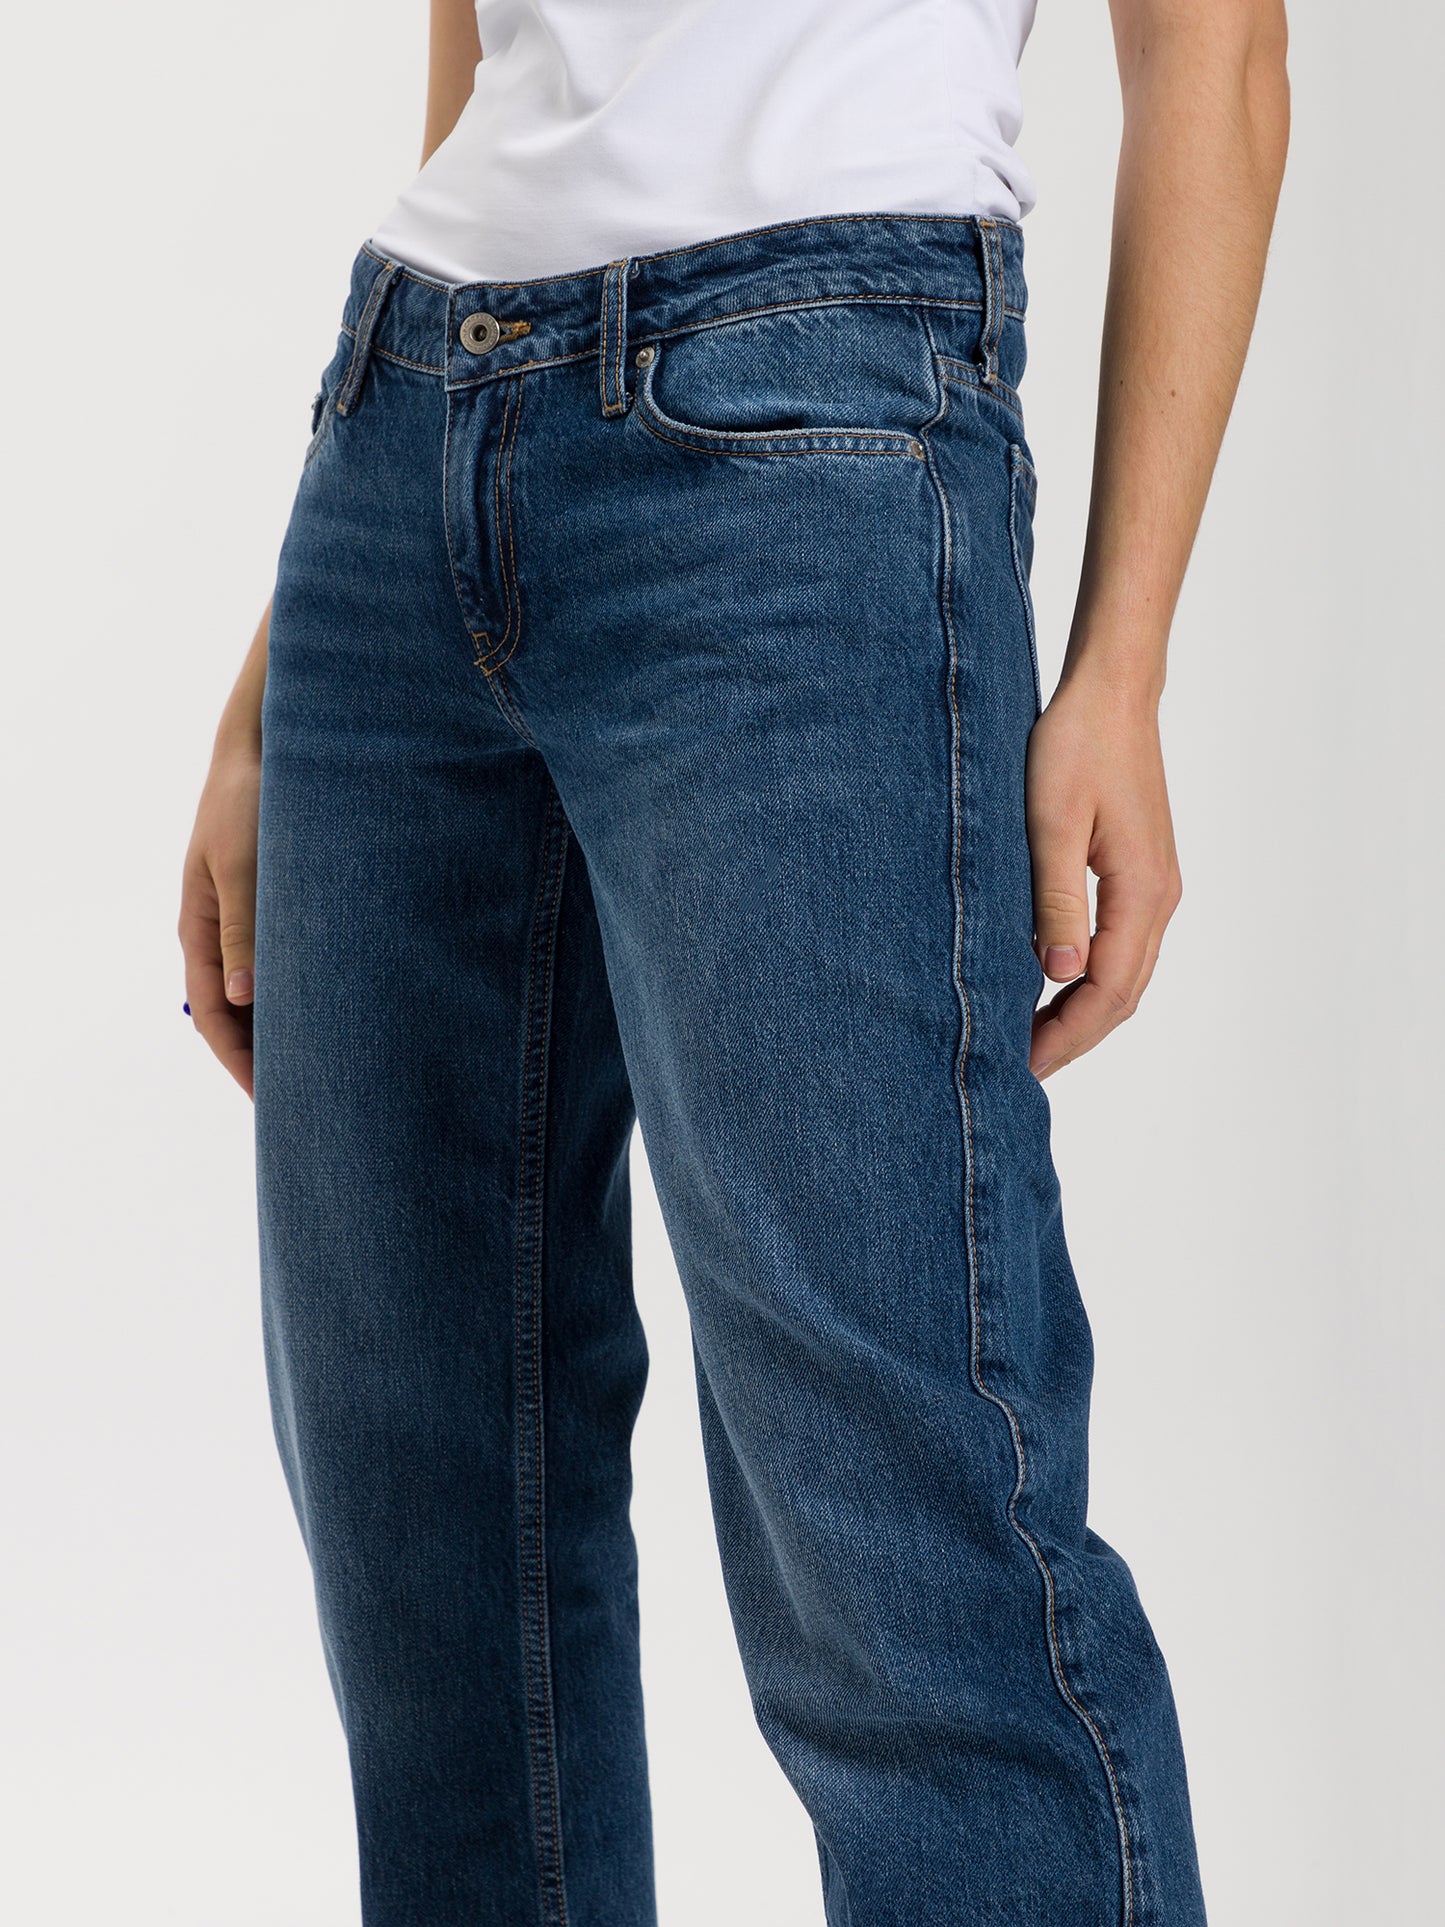 Lily women's jeans straight fit low waist in dark blue